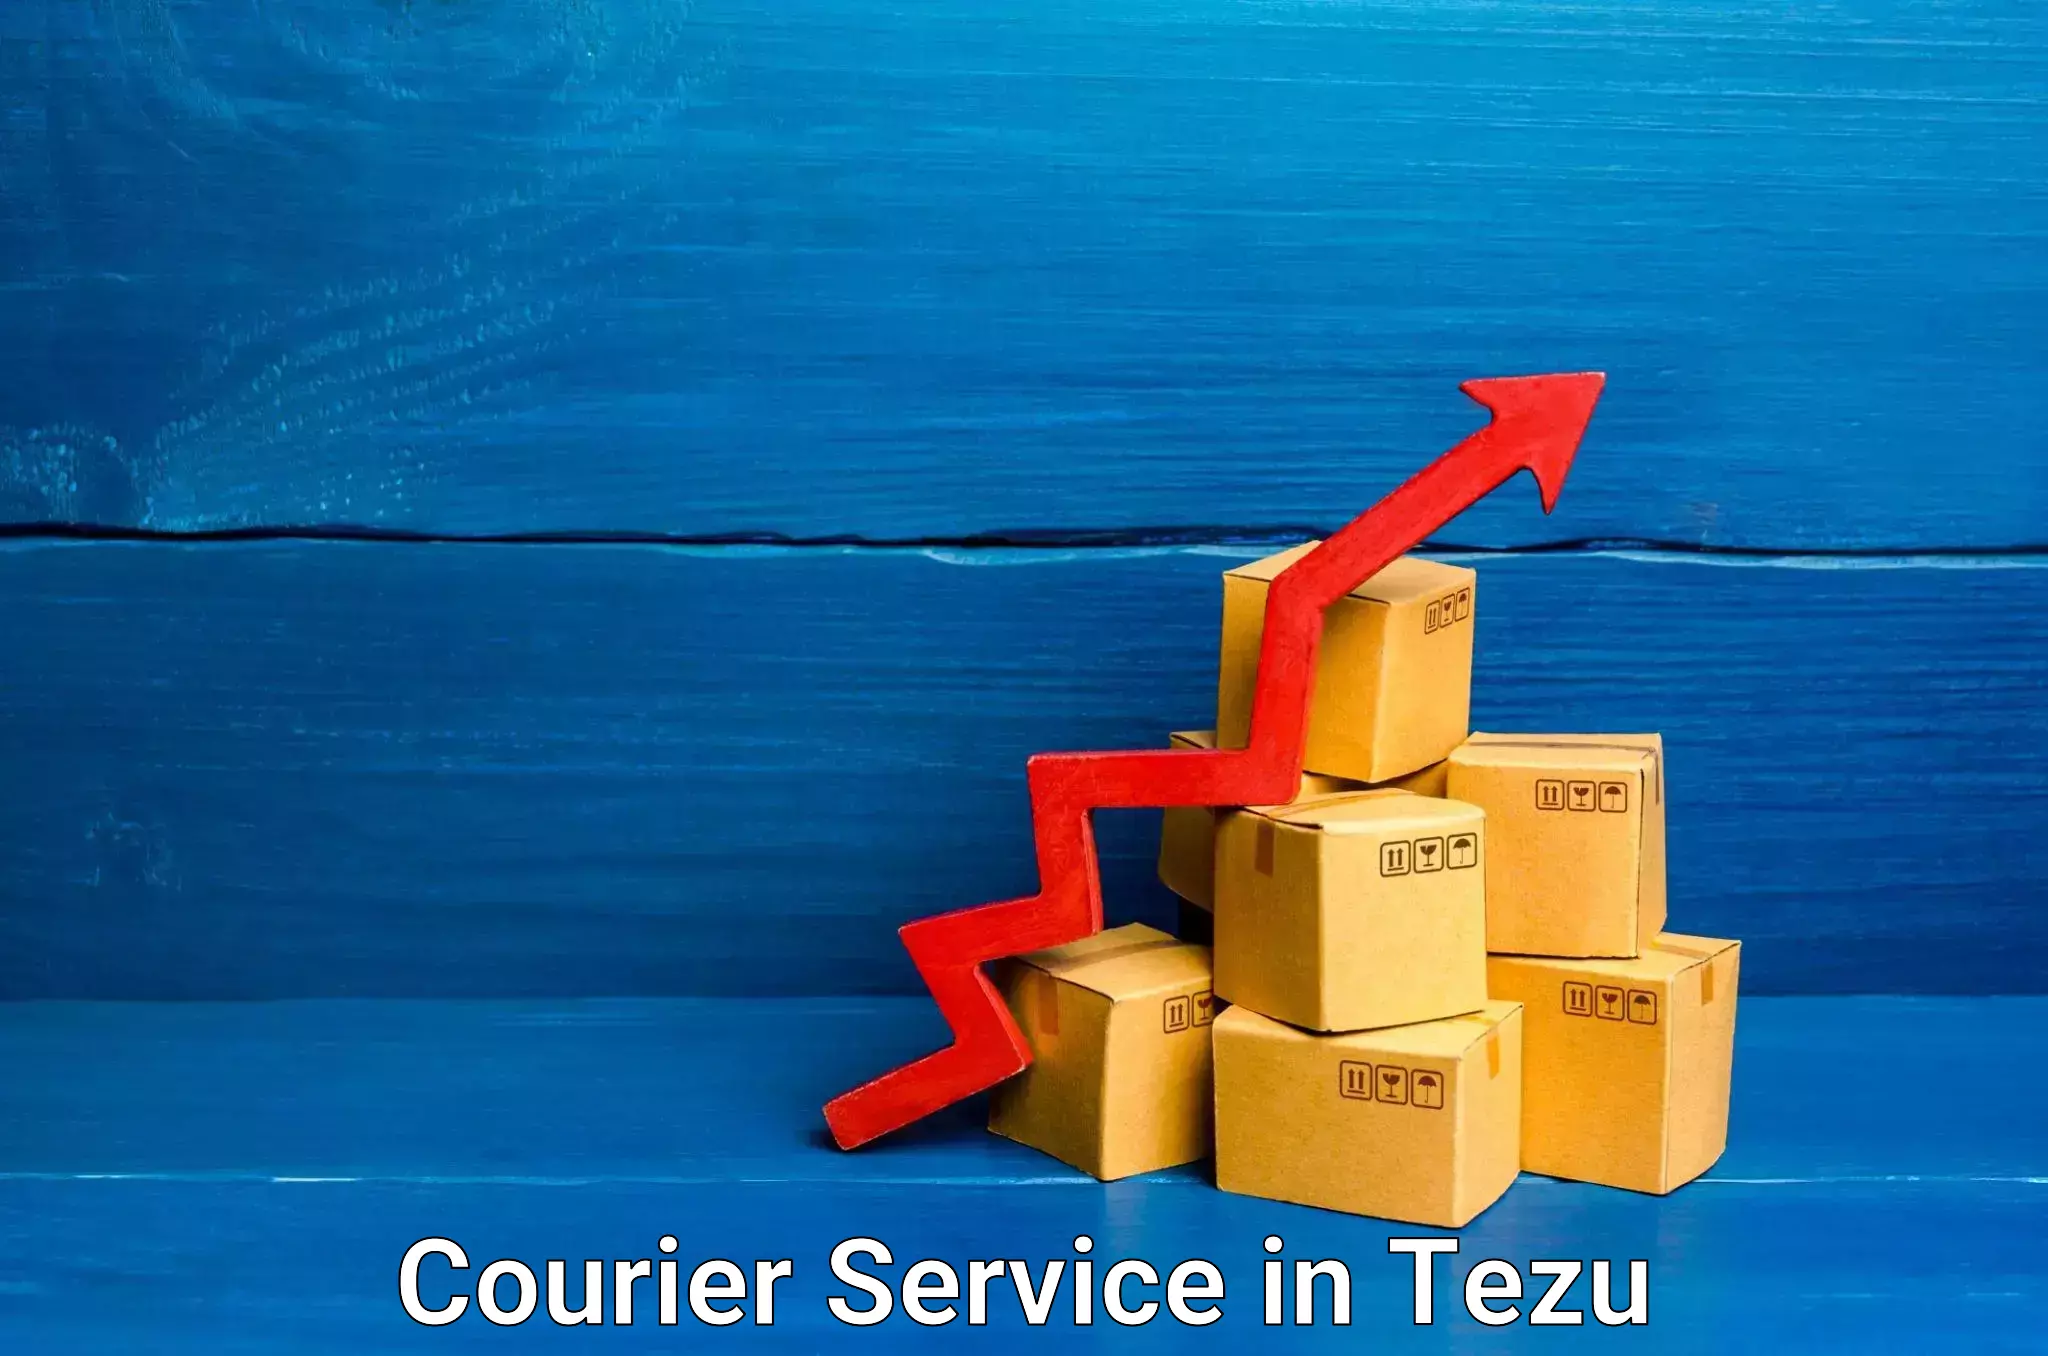 Enhanced shipping experience in Tezu